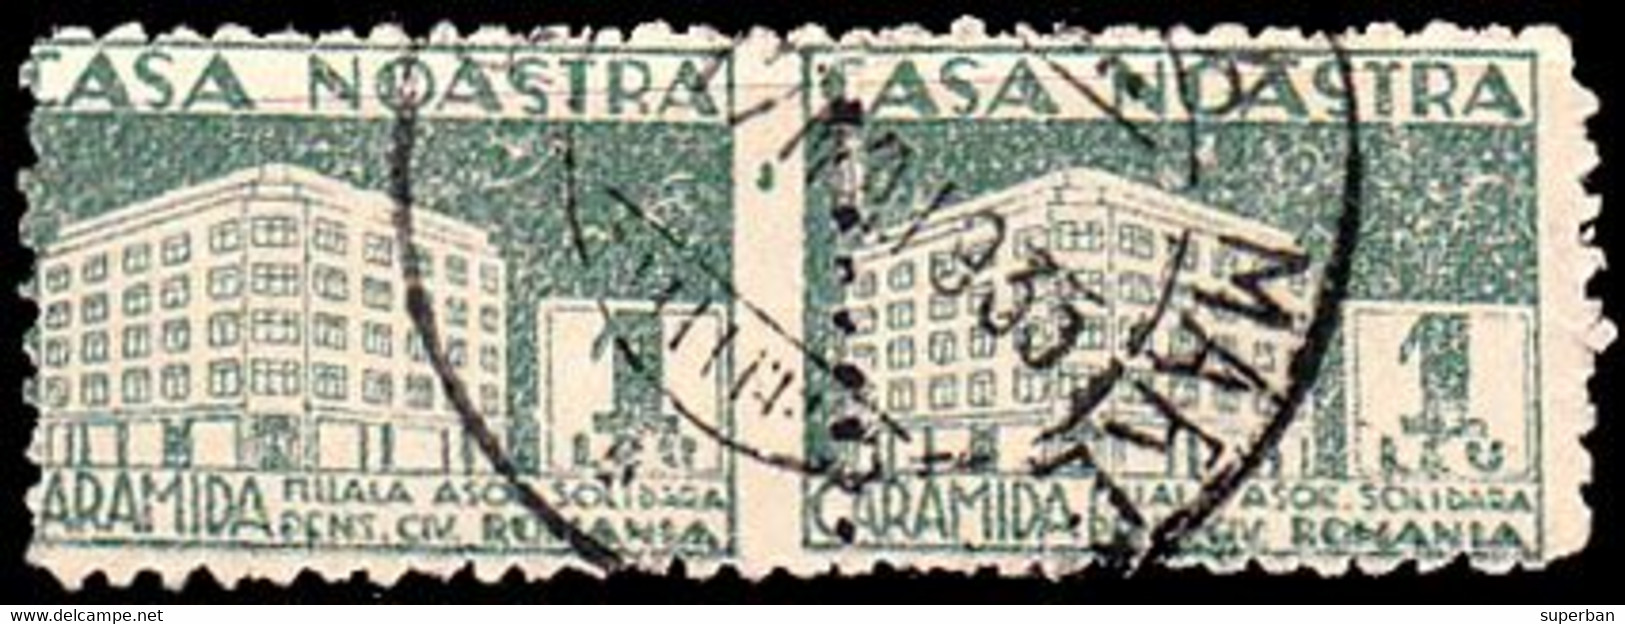 ROUMANIE / ROMANIA - CINDERELLA / TIMBRU CARAMIDA : 1 LEU - CASA NOASTRA - FUND RAISING For RETIRED ~ 1930 - '35 (ai033) - Fiscaux